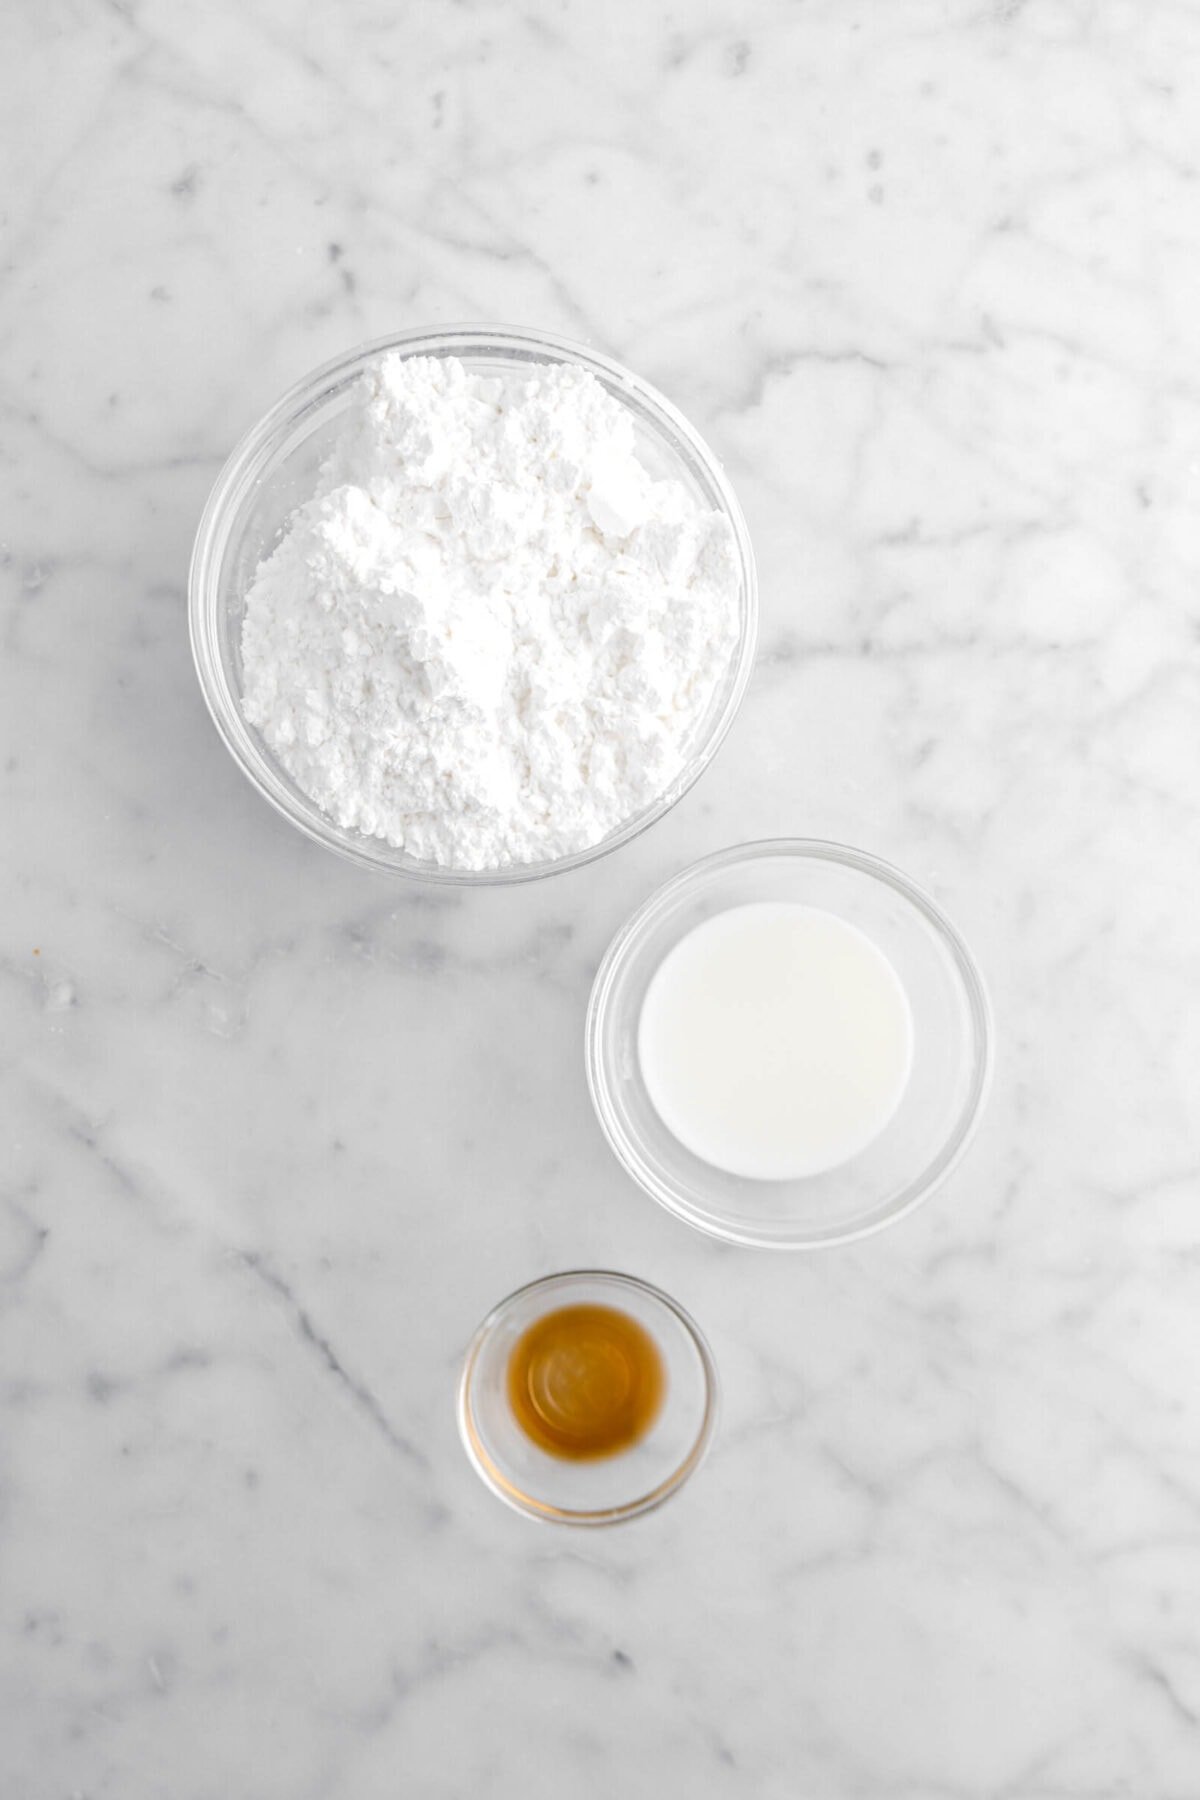 Powdered sugar, milk, and vanilla on marble surface